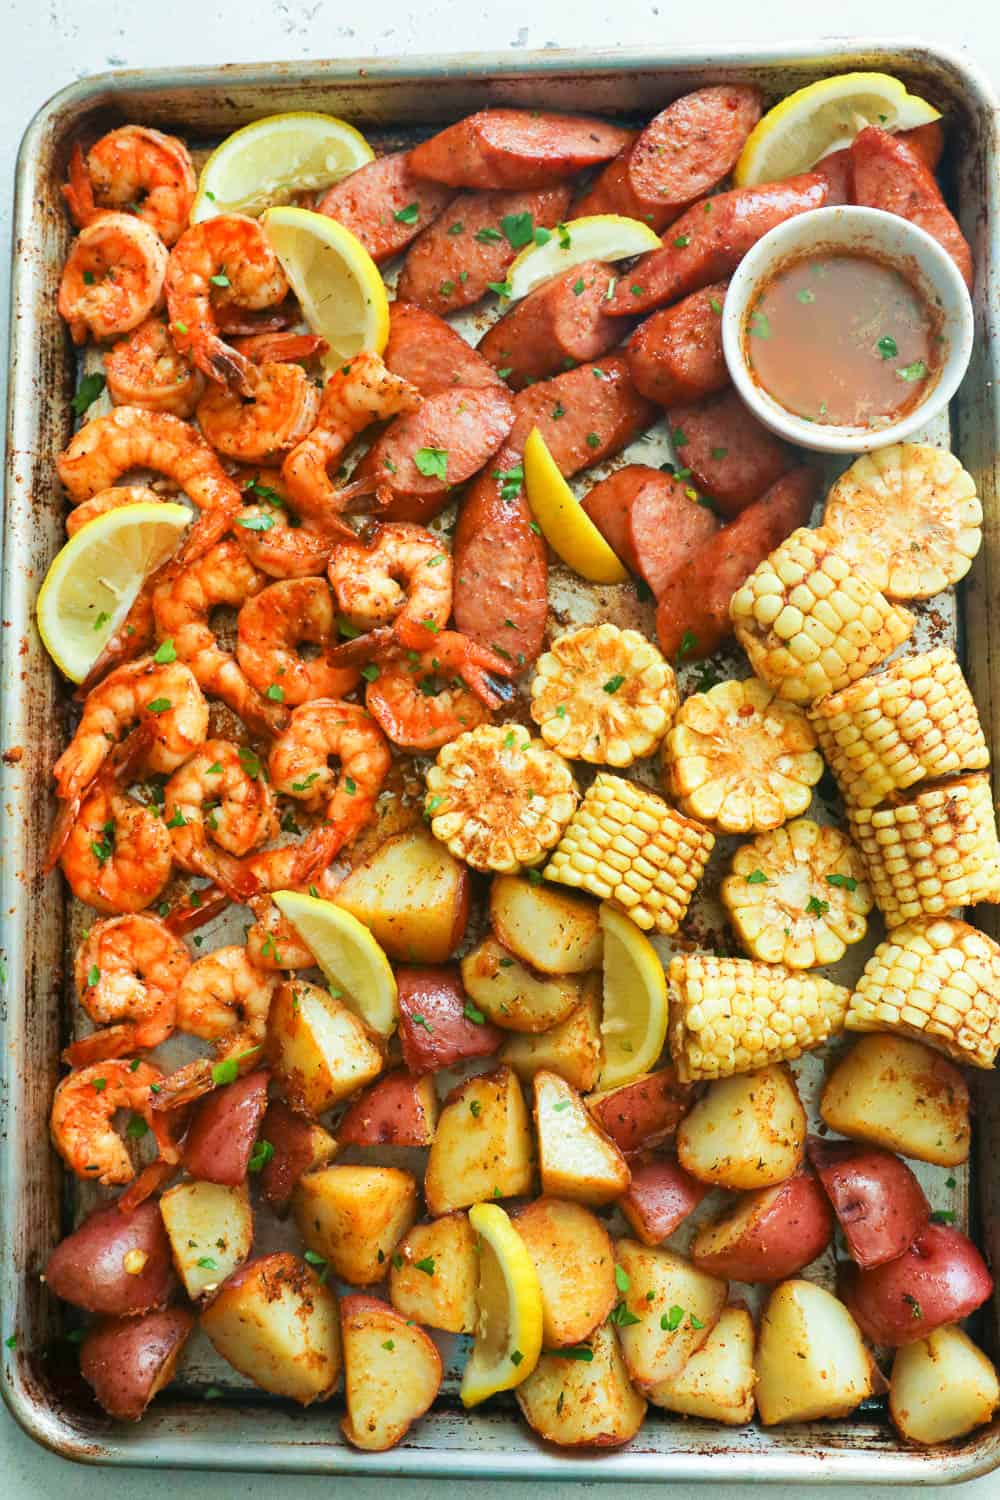 Cajun shrimp, red potatoes, sausage, and corn season with creole seasoning